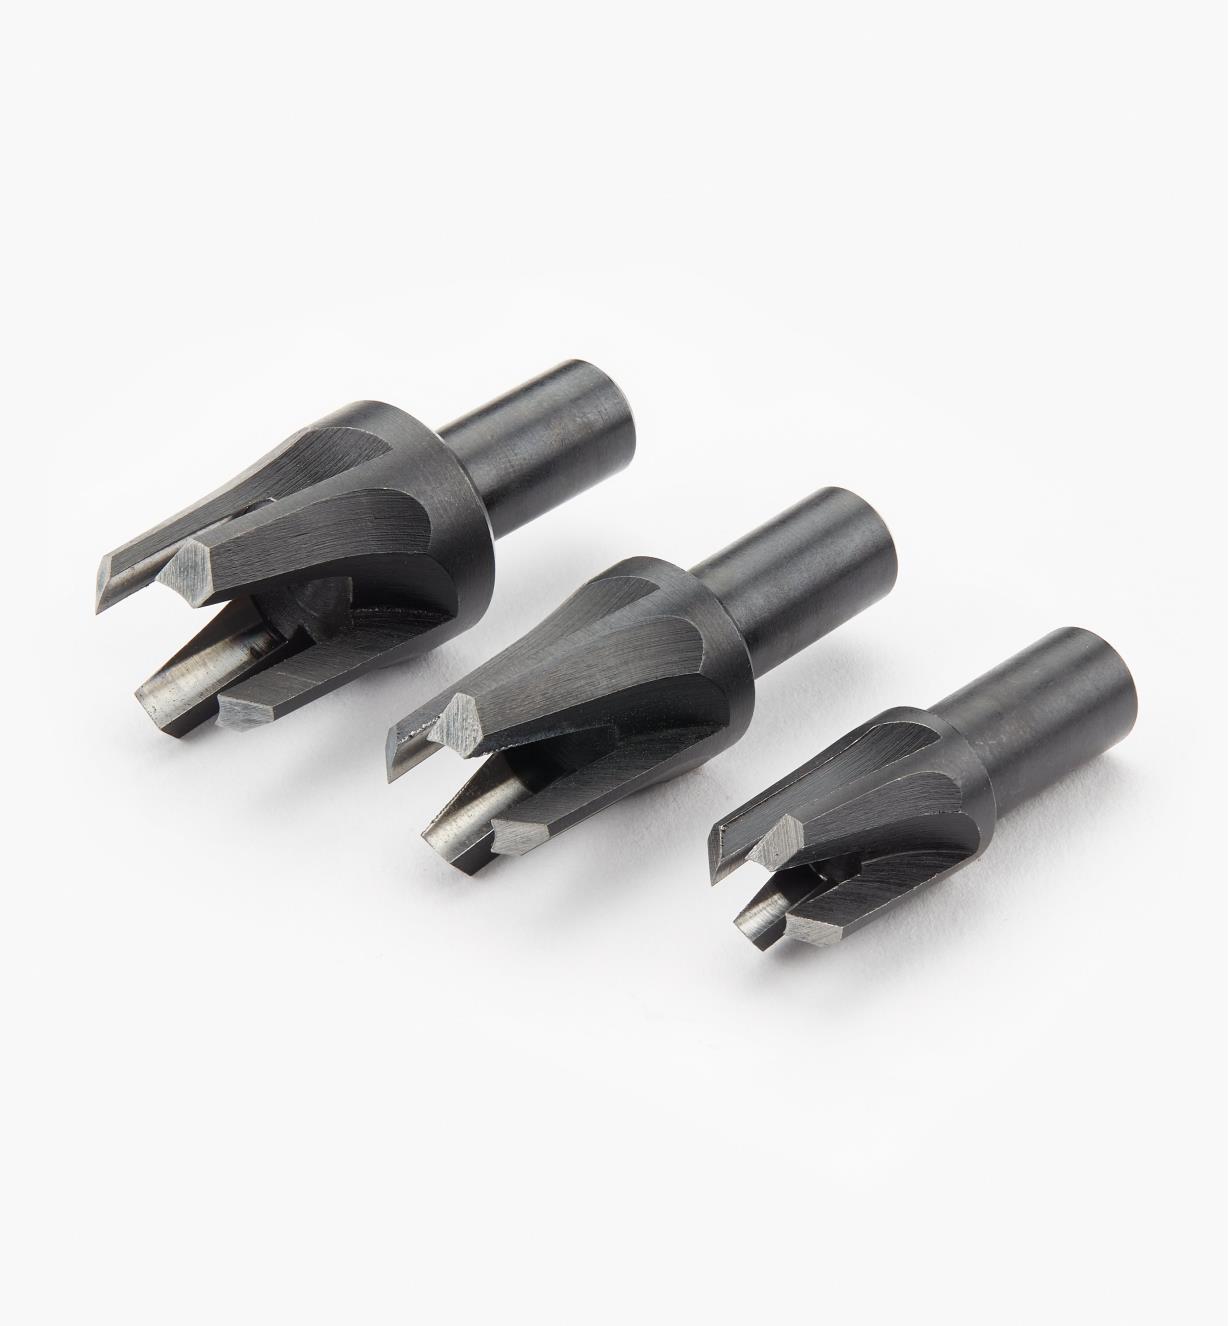 05J0510 - Set of 3 Imperial Veritas Tapered Snug-Plug Cutters (1/4", 3/8", 1/2")